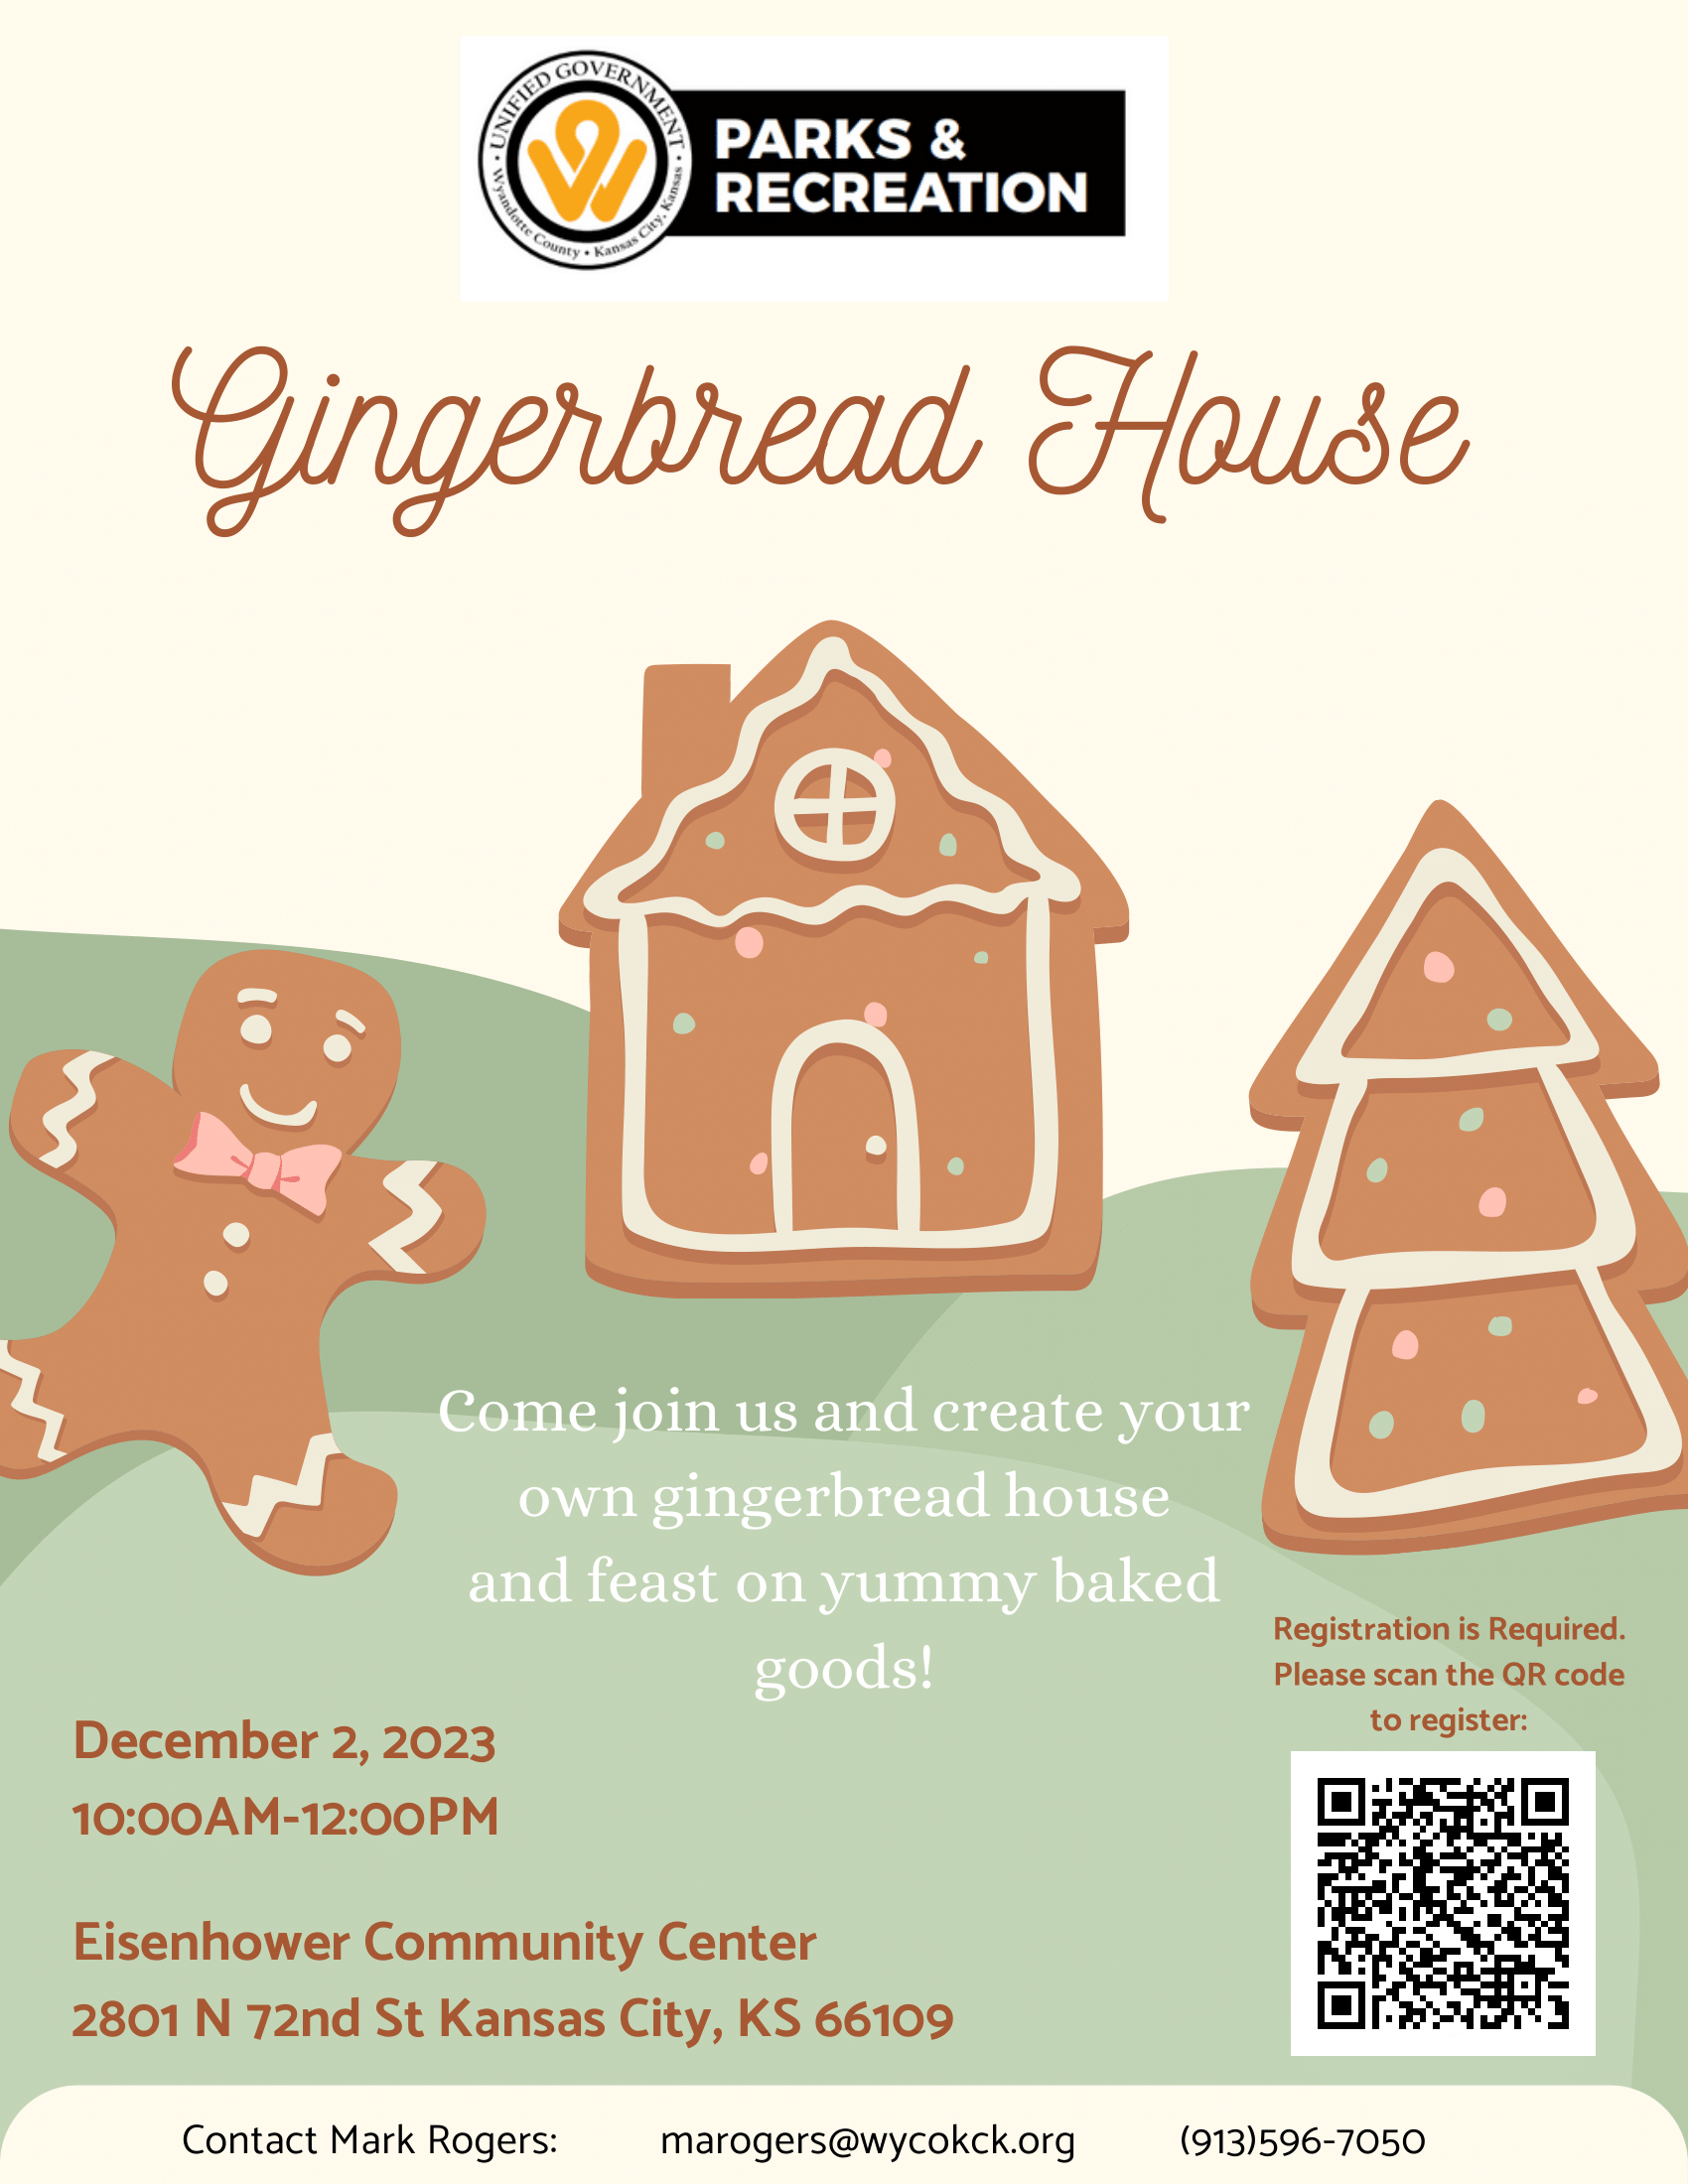 Gingerbread House Eisenhower